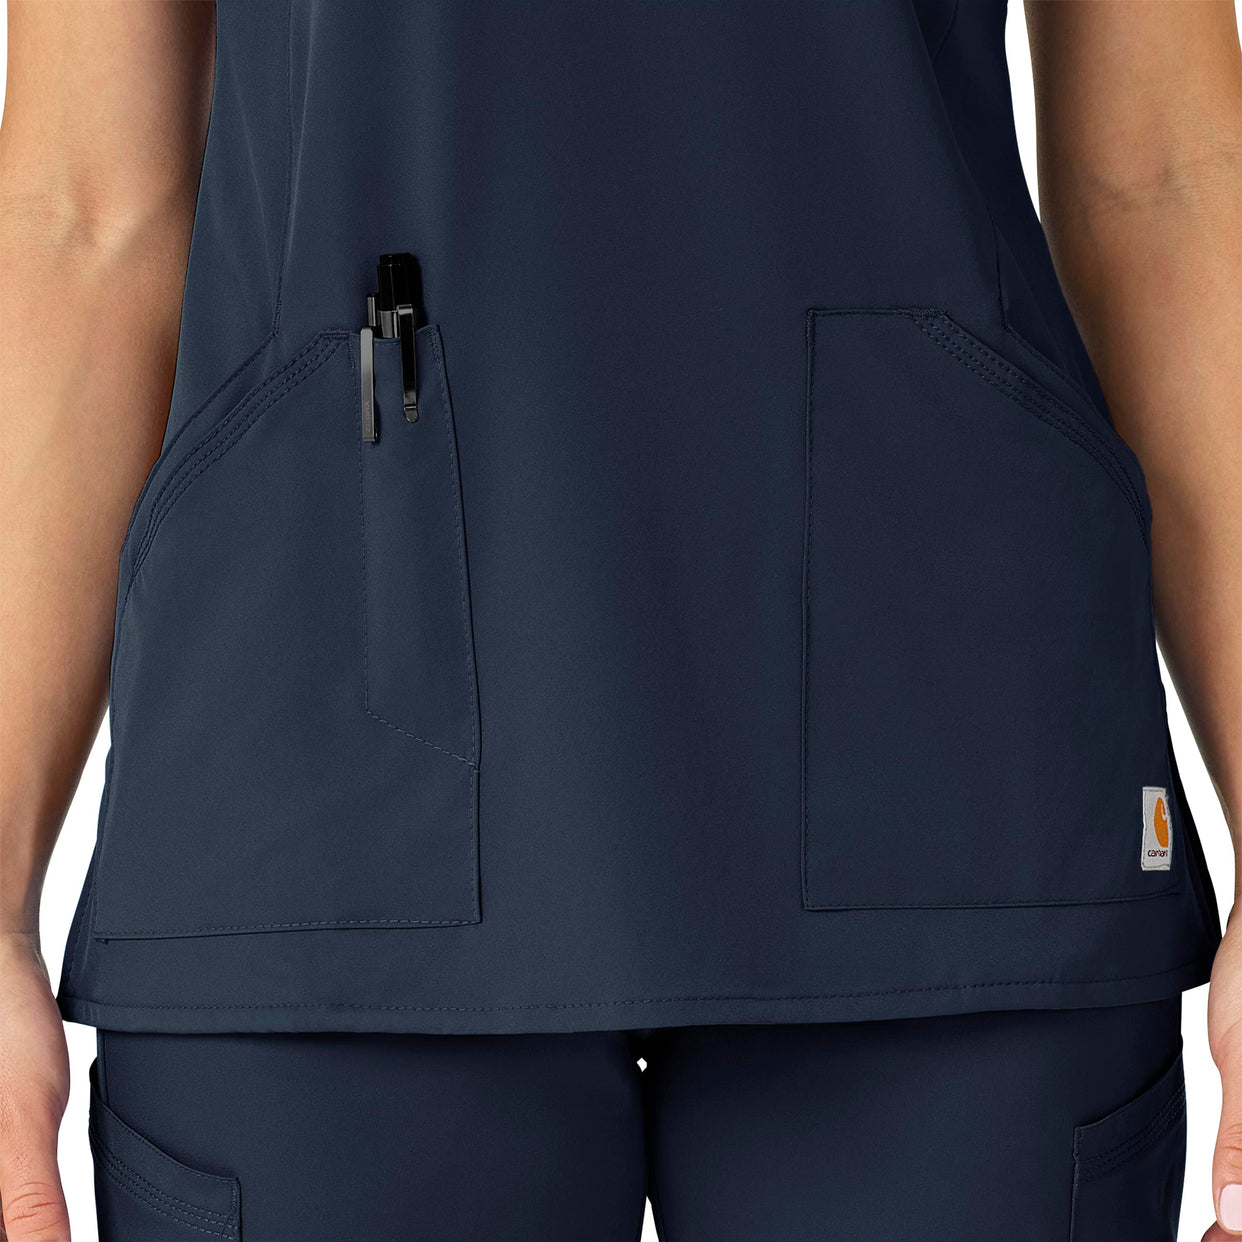 Force Liberty Women's Multi-Pocket V-Neck Scrub Top Navy front detail